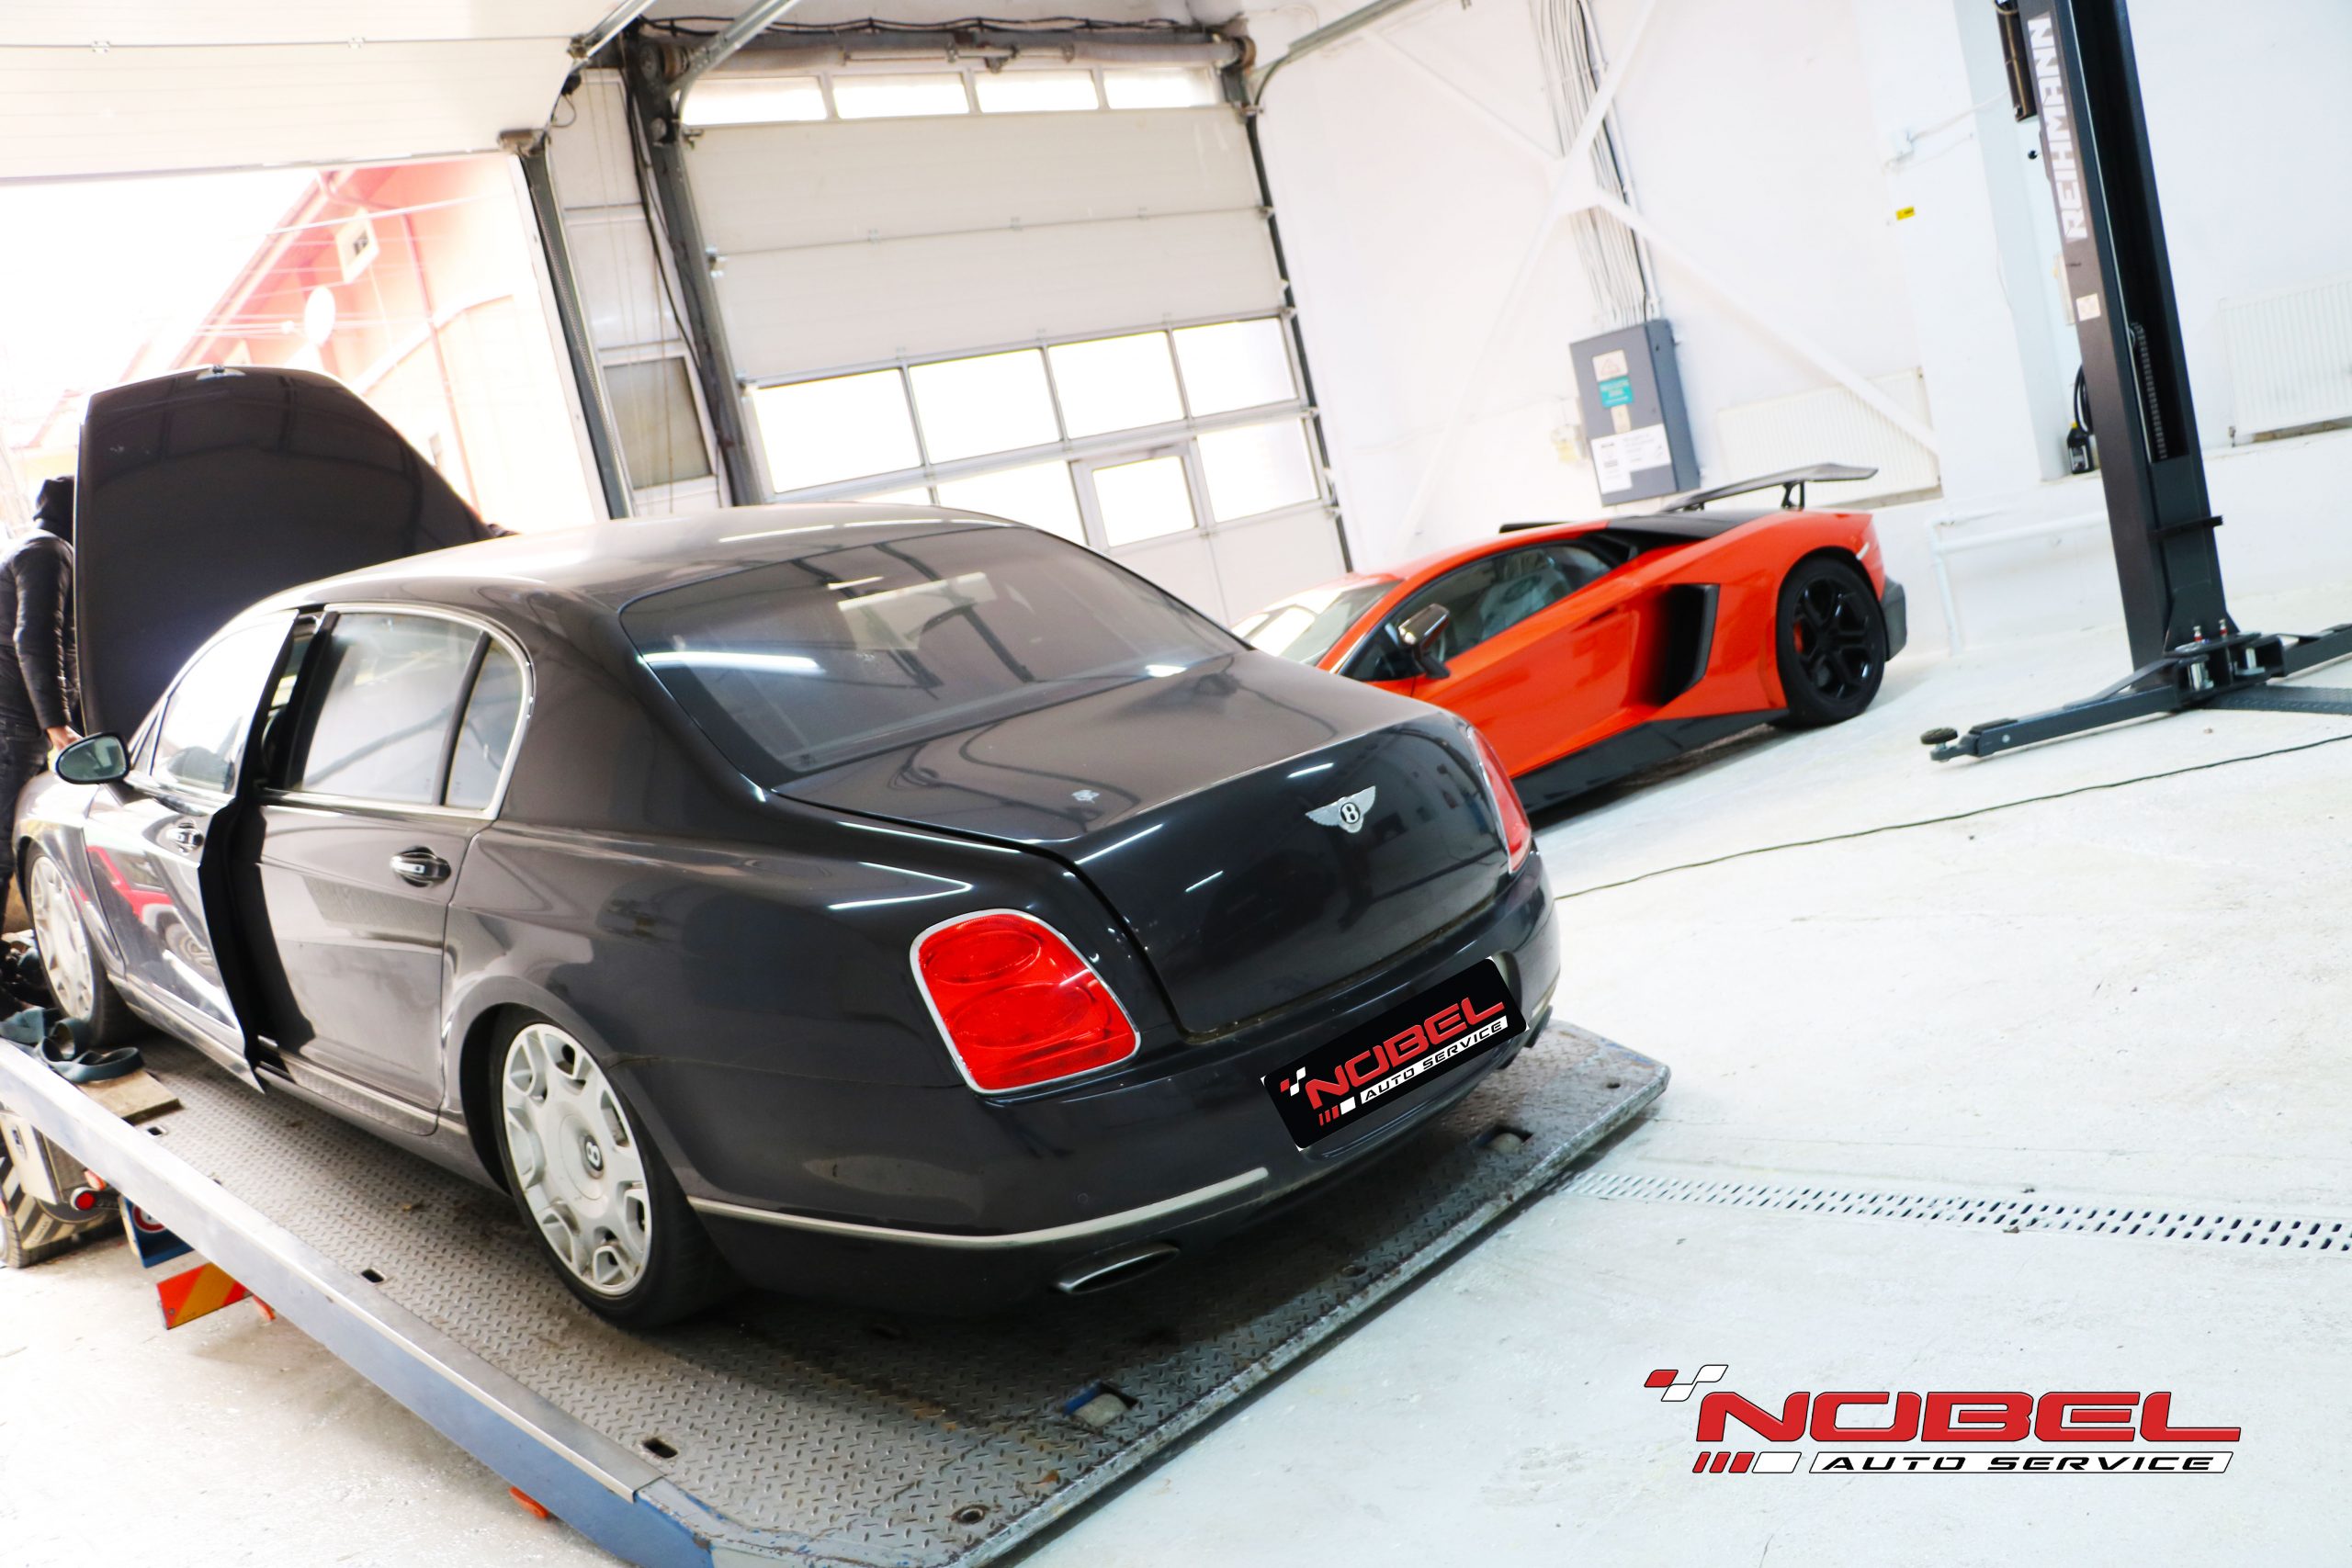 Bentley piese auto Nobel Auto Service electrica electronica mecanica